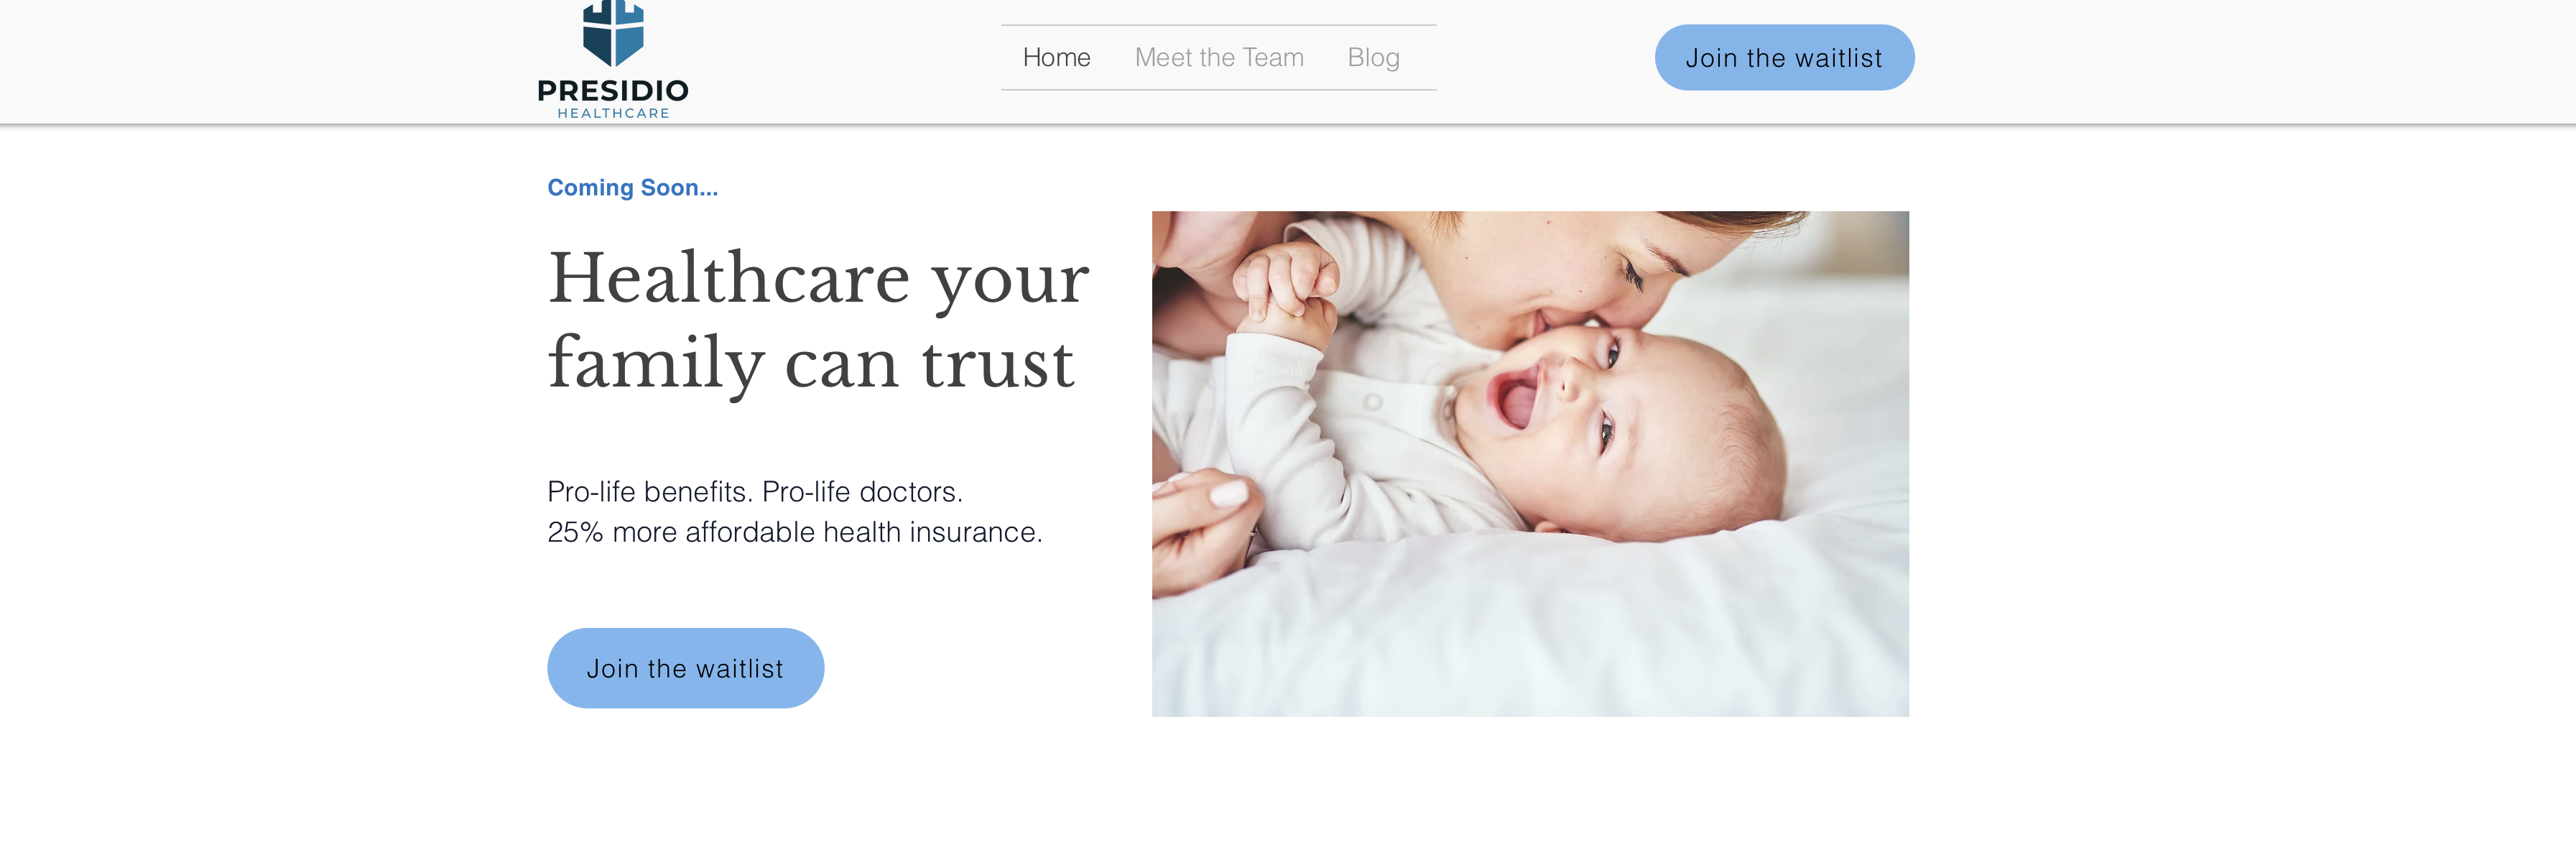 header image for Presidio HealthCare featuring a newborn baby